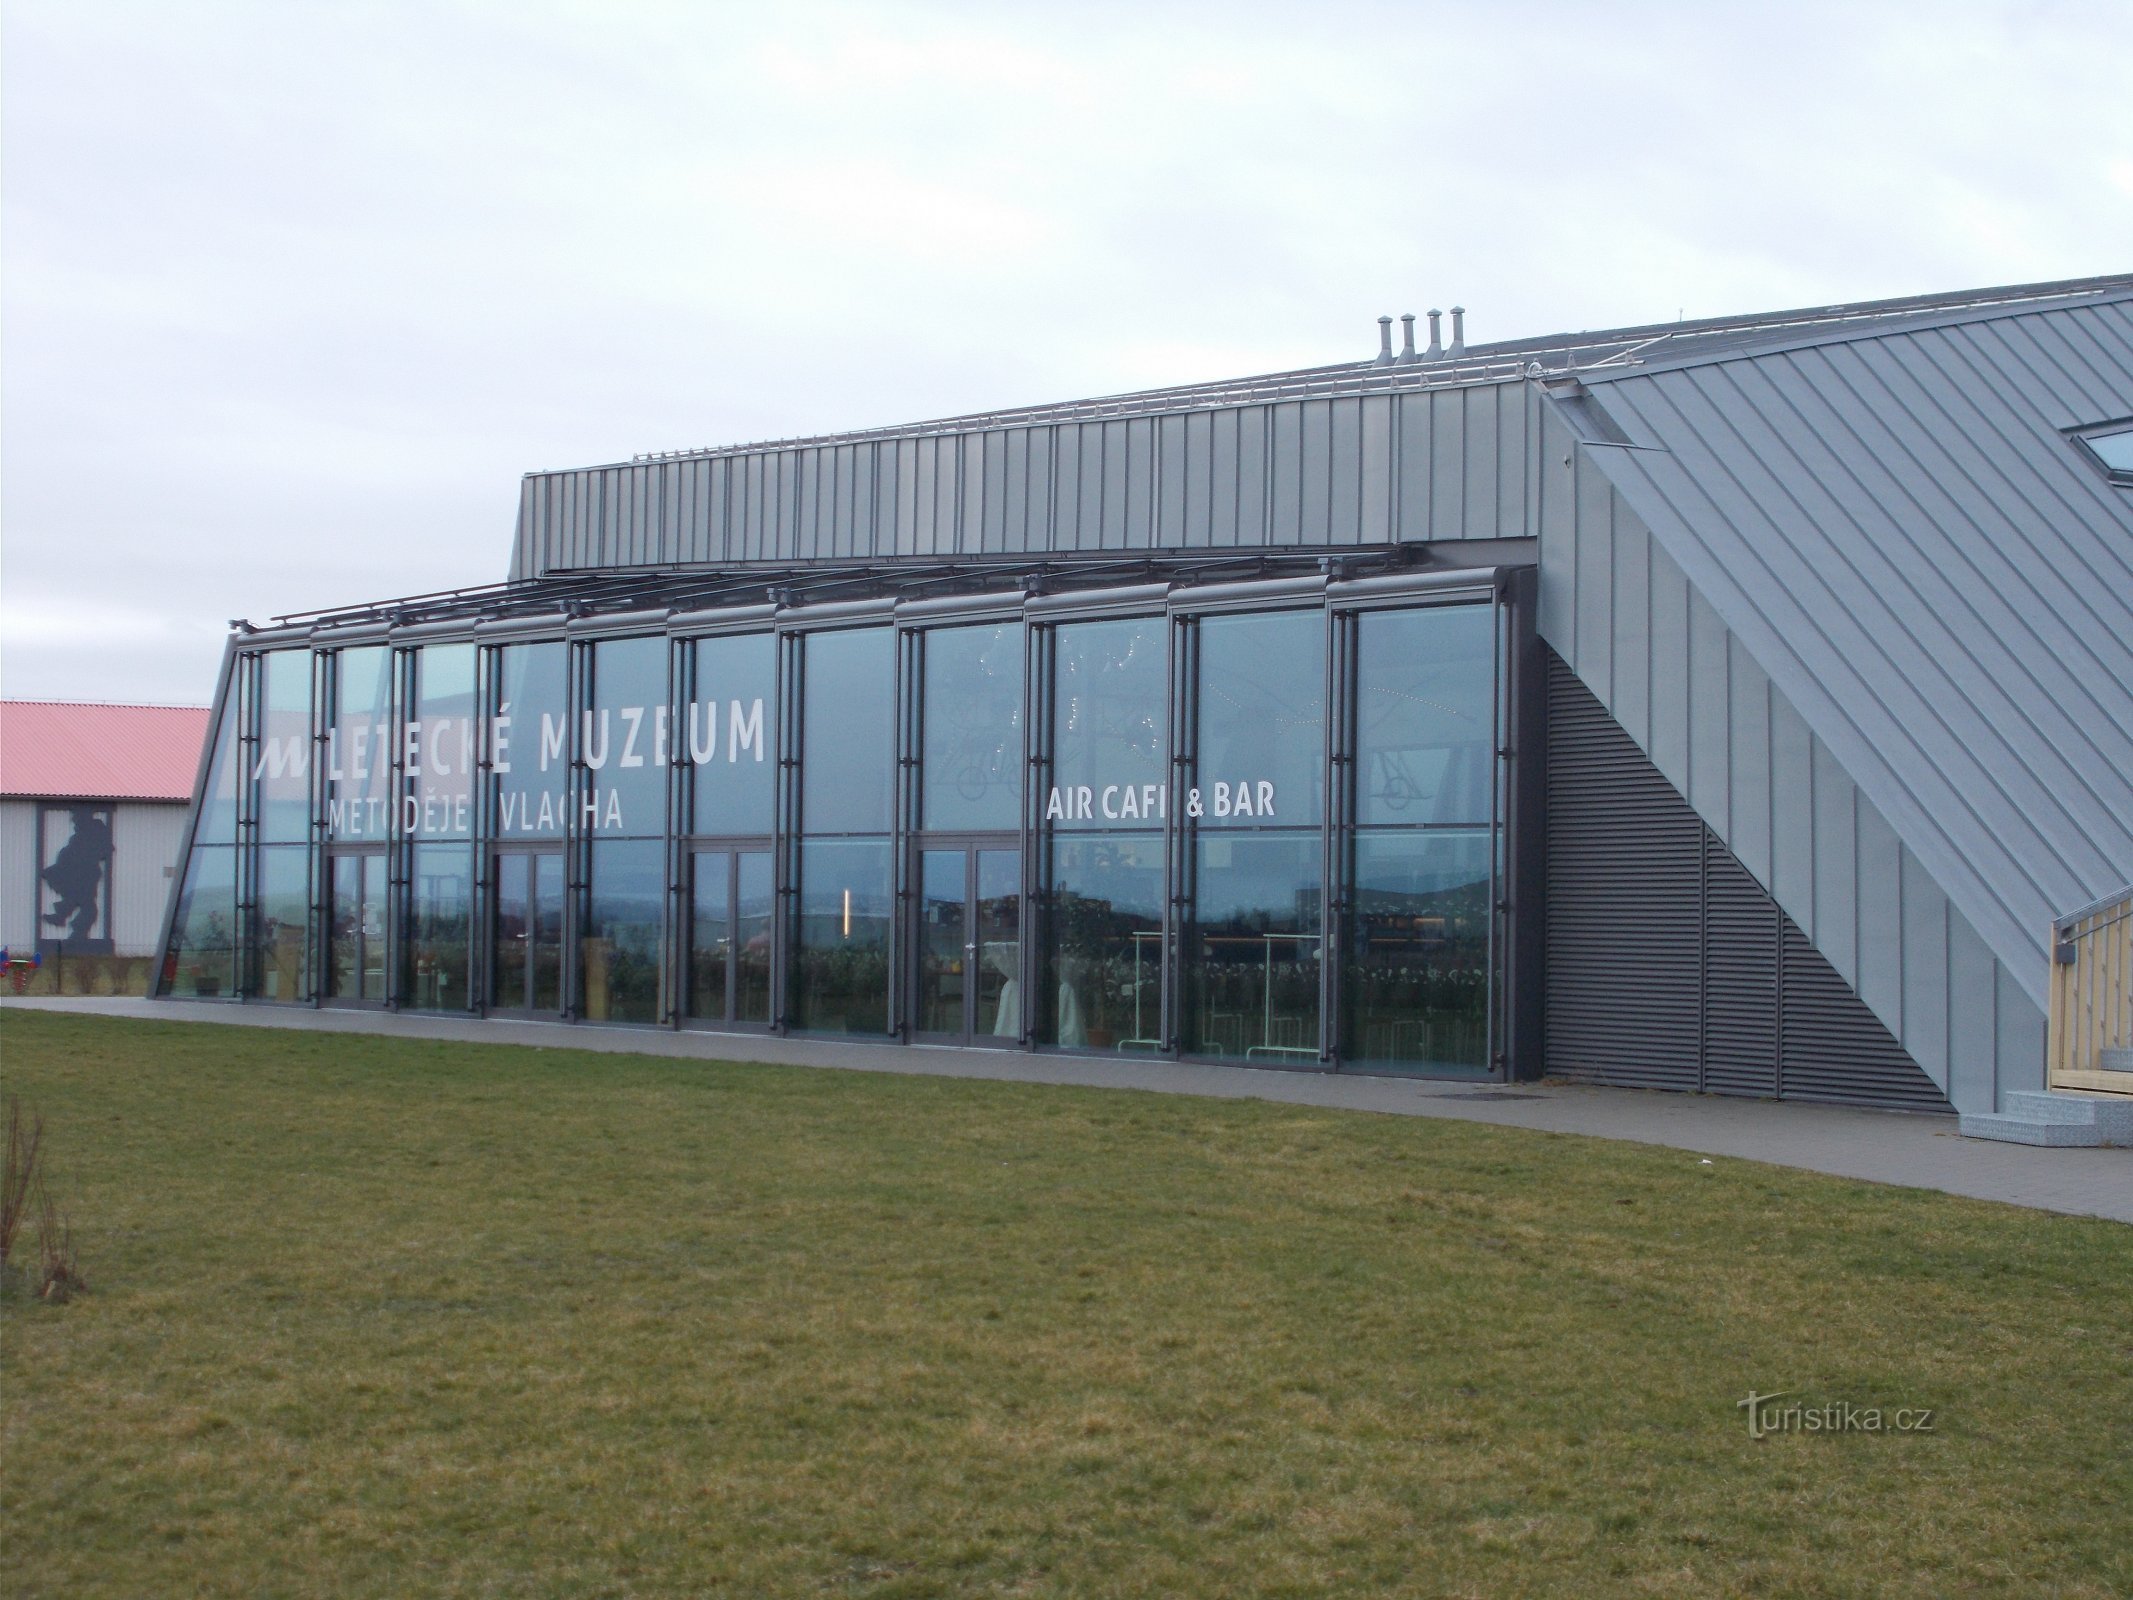 Luchtvaartmuseum Metoděj Vlach